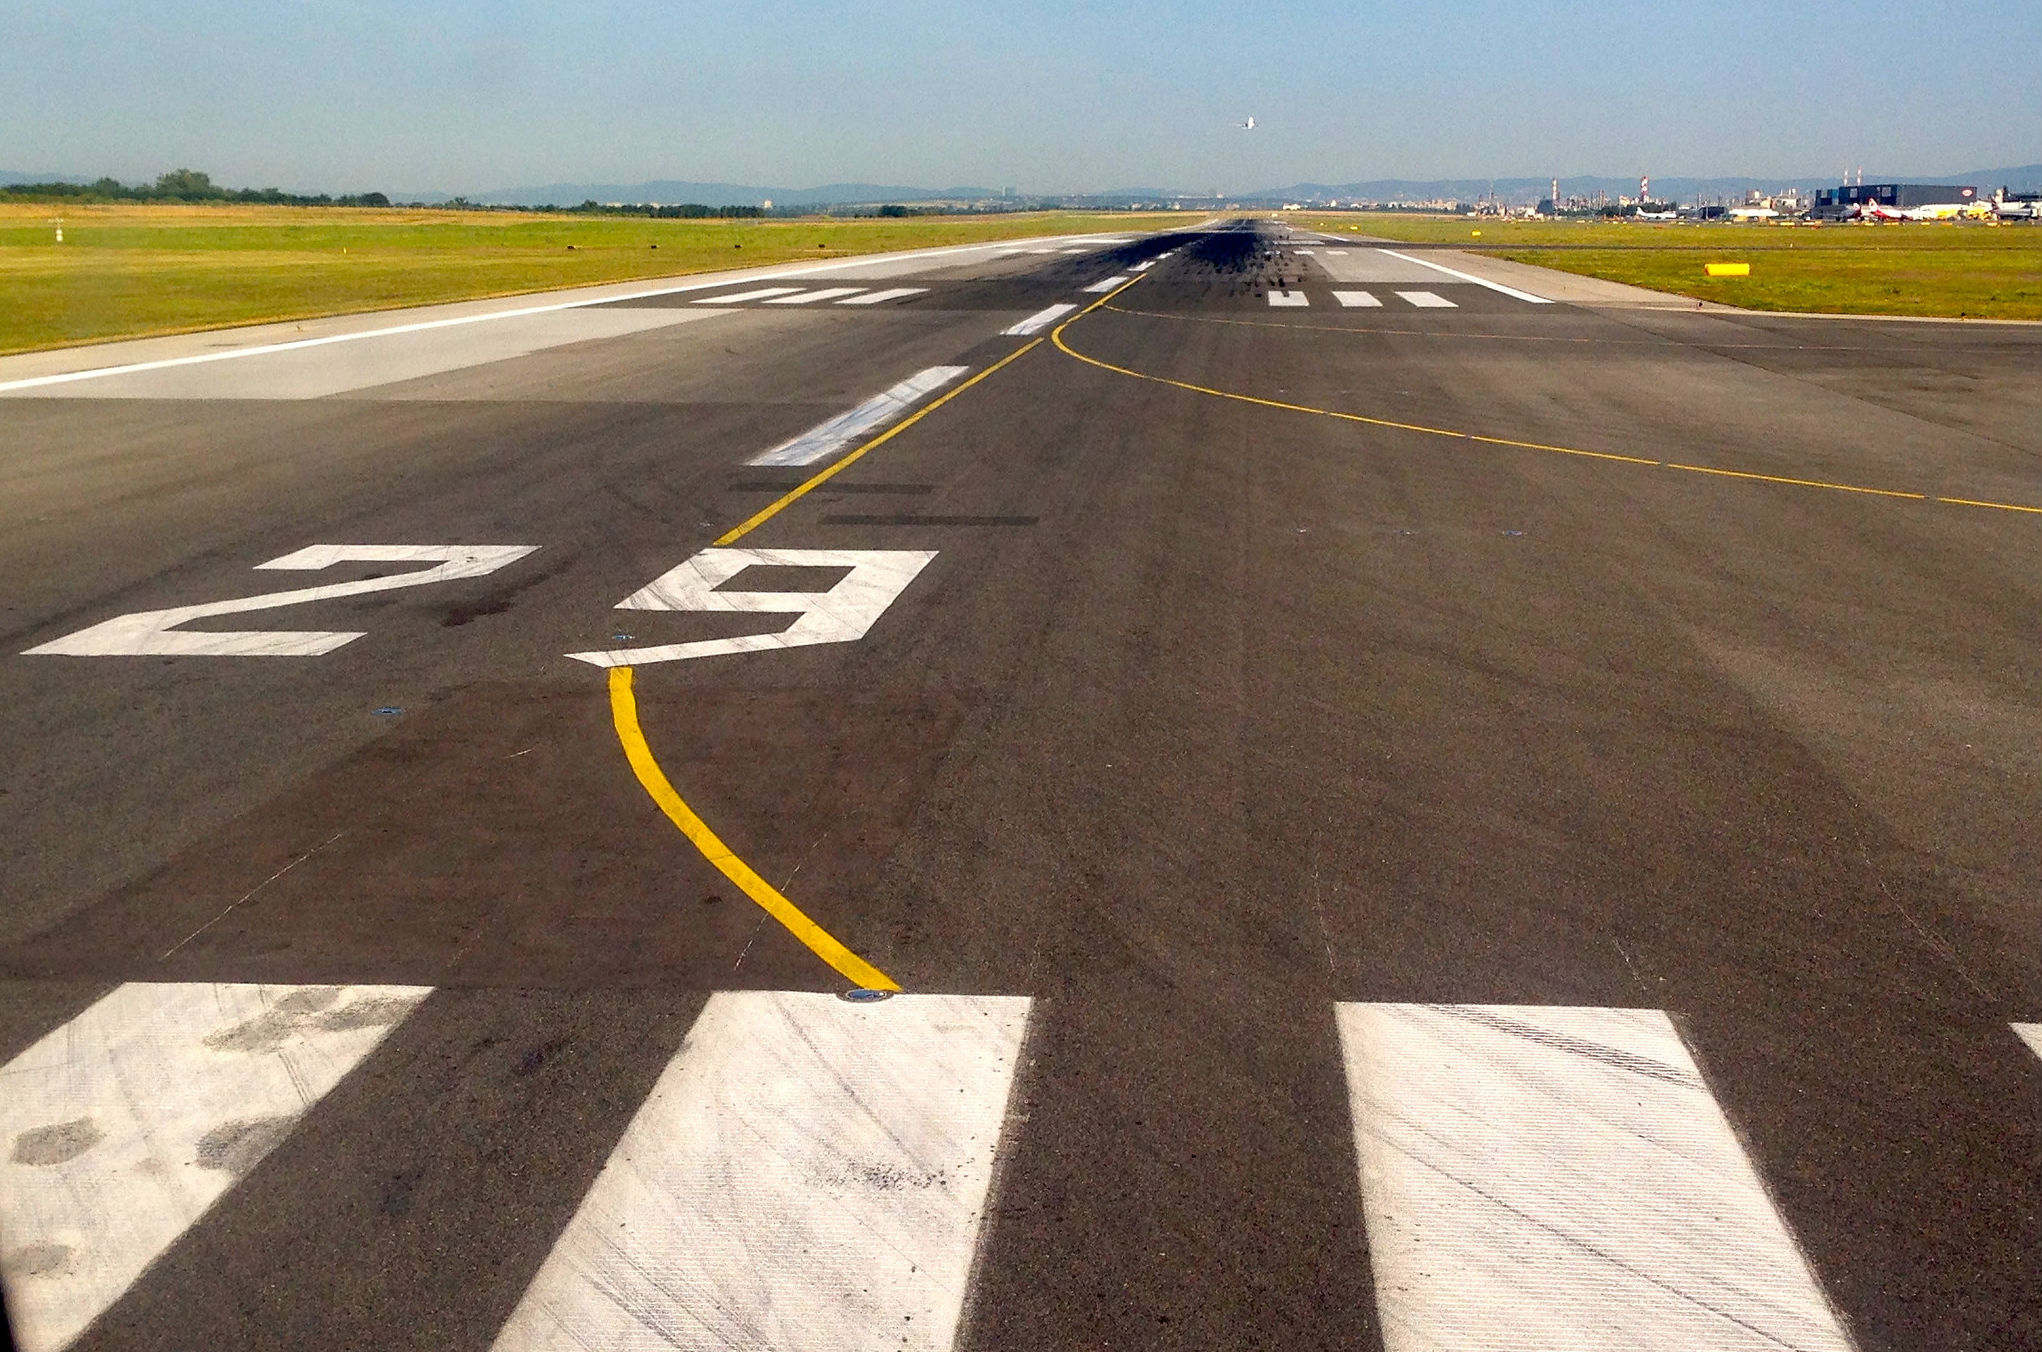 Looking down an airport runway.